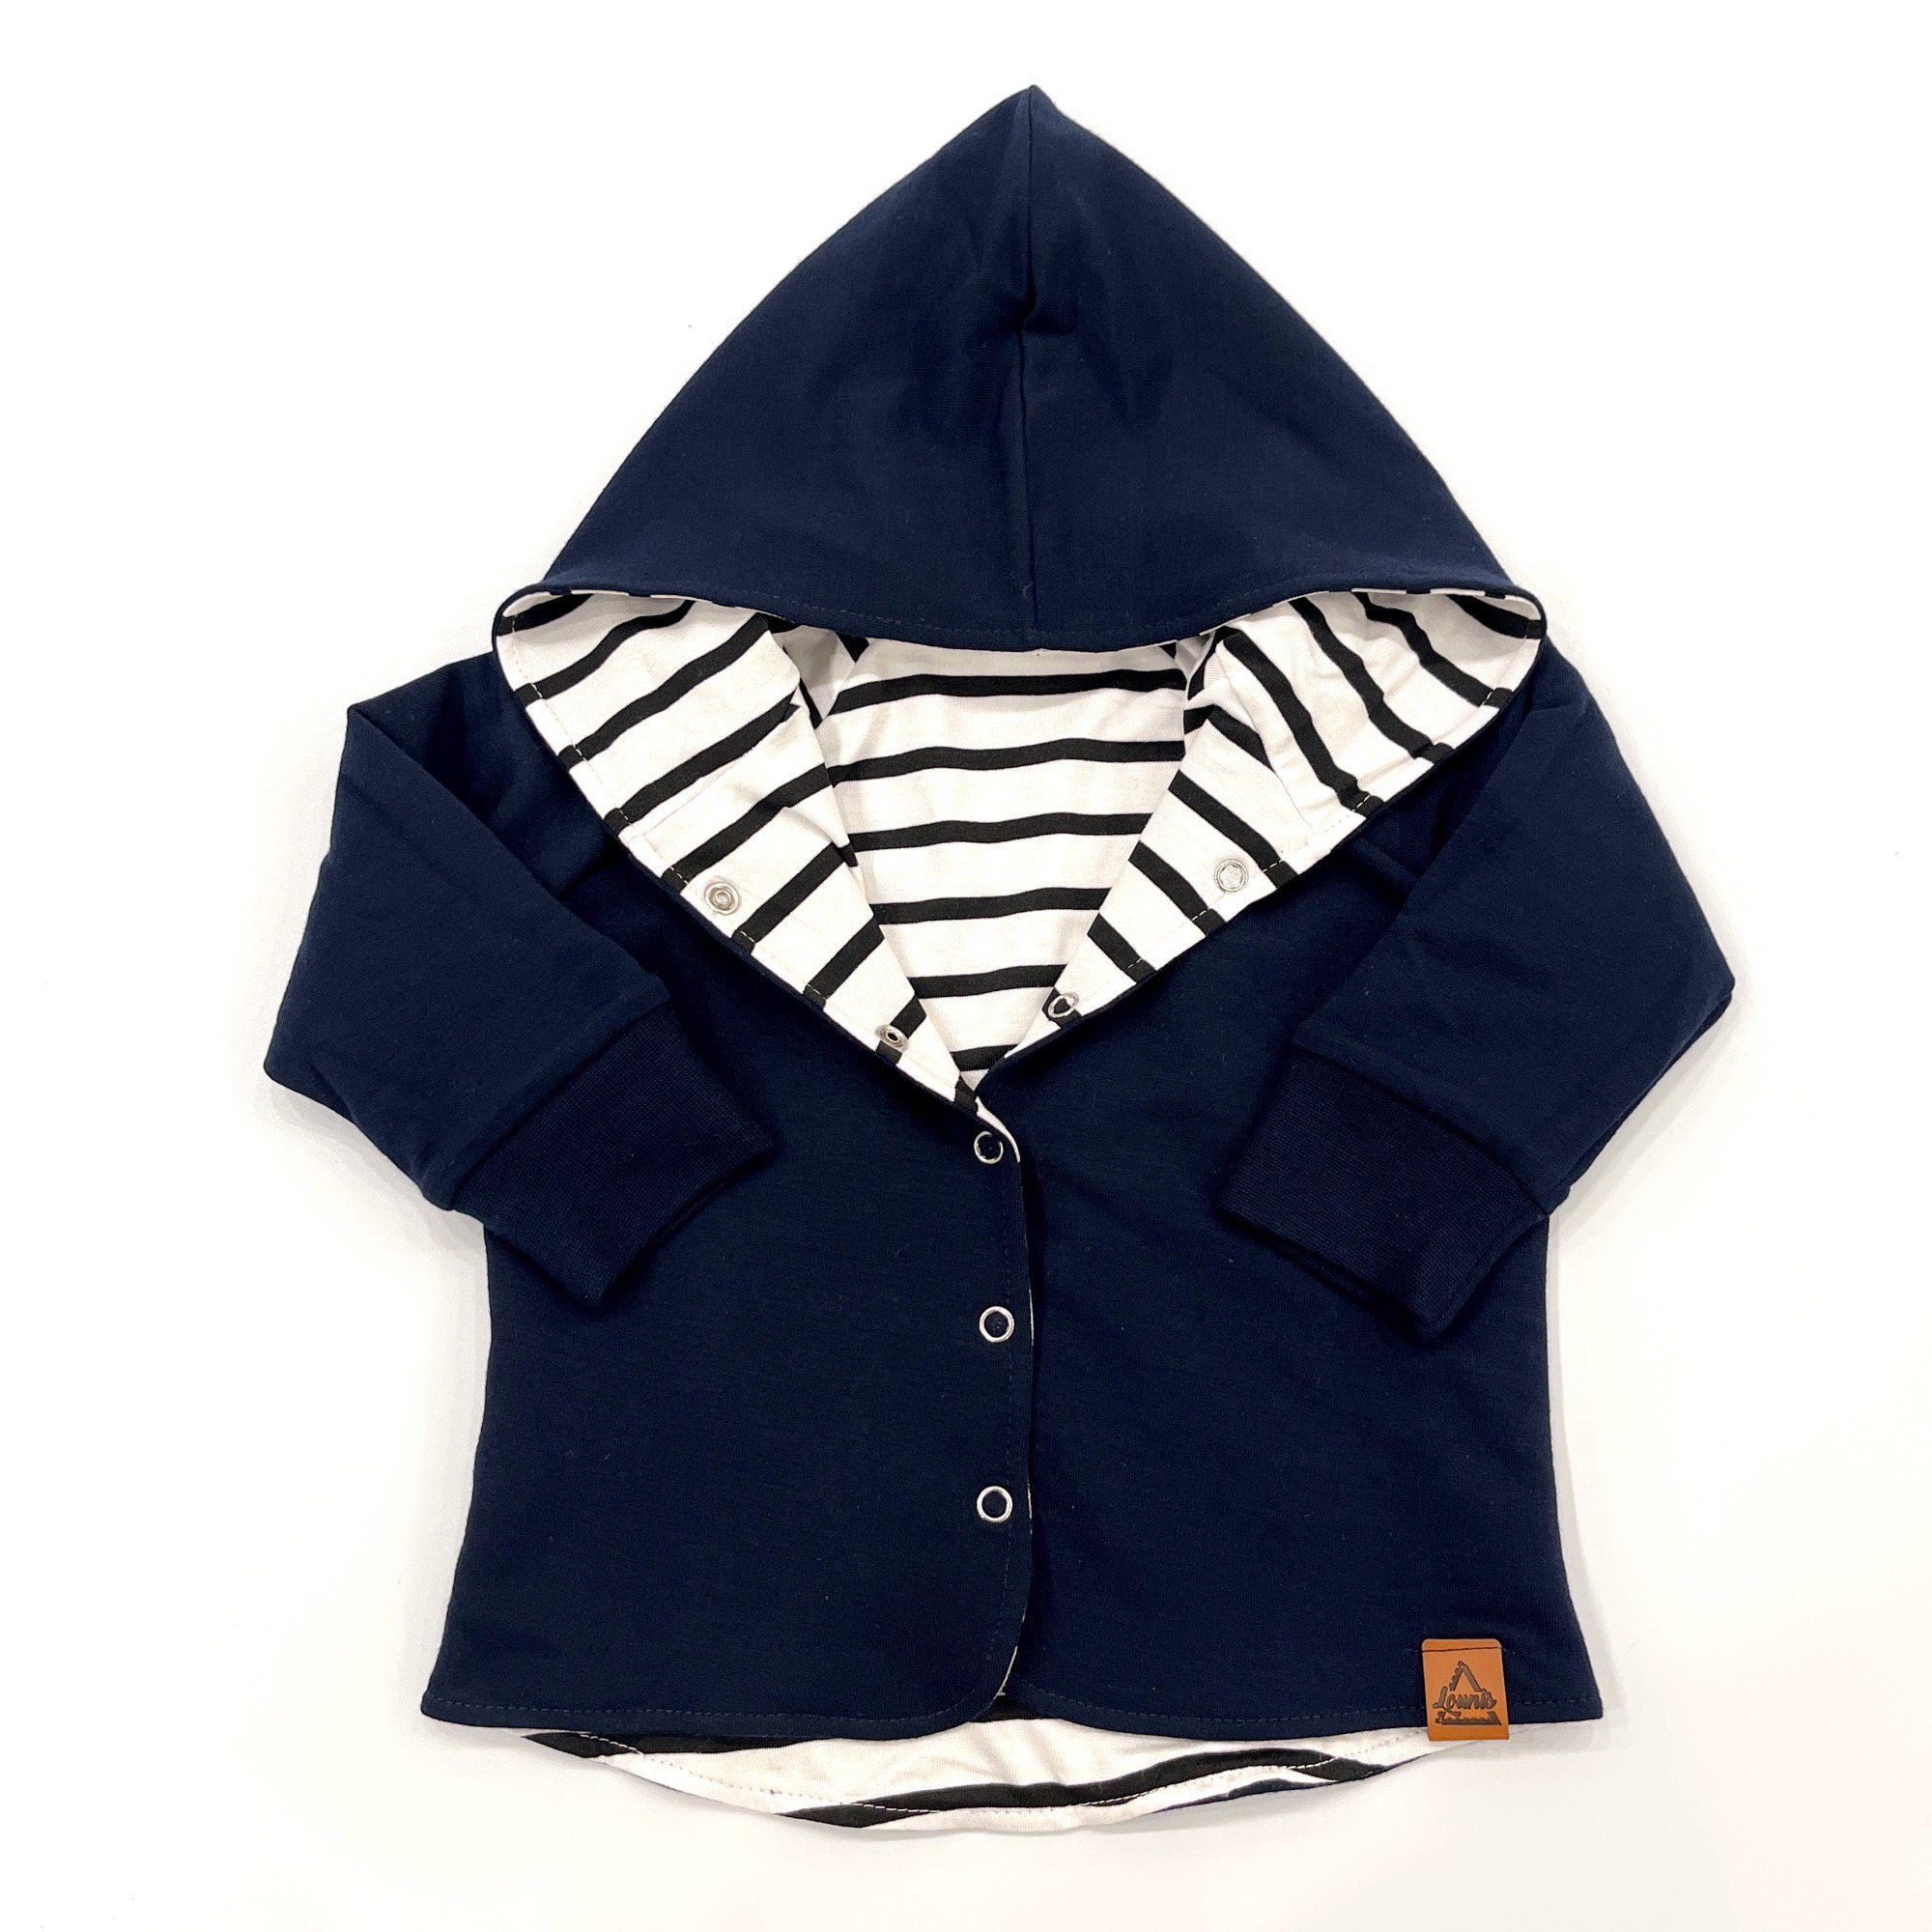 Wendejacke marineblau/schwarz-weiß - gestreift Babyjacke Baumwolle Lounis Kinderjacke -